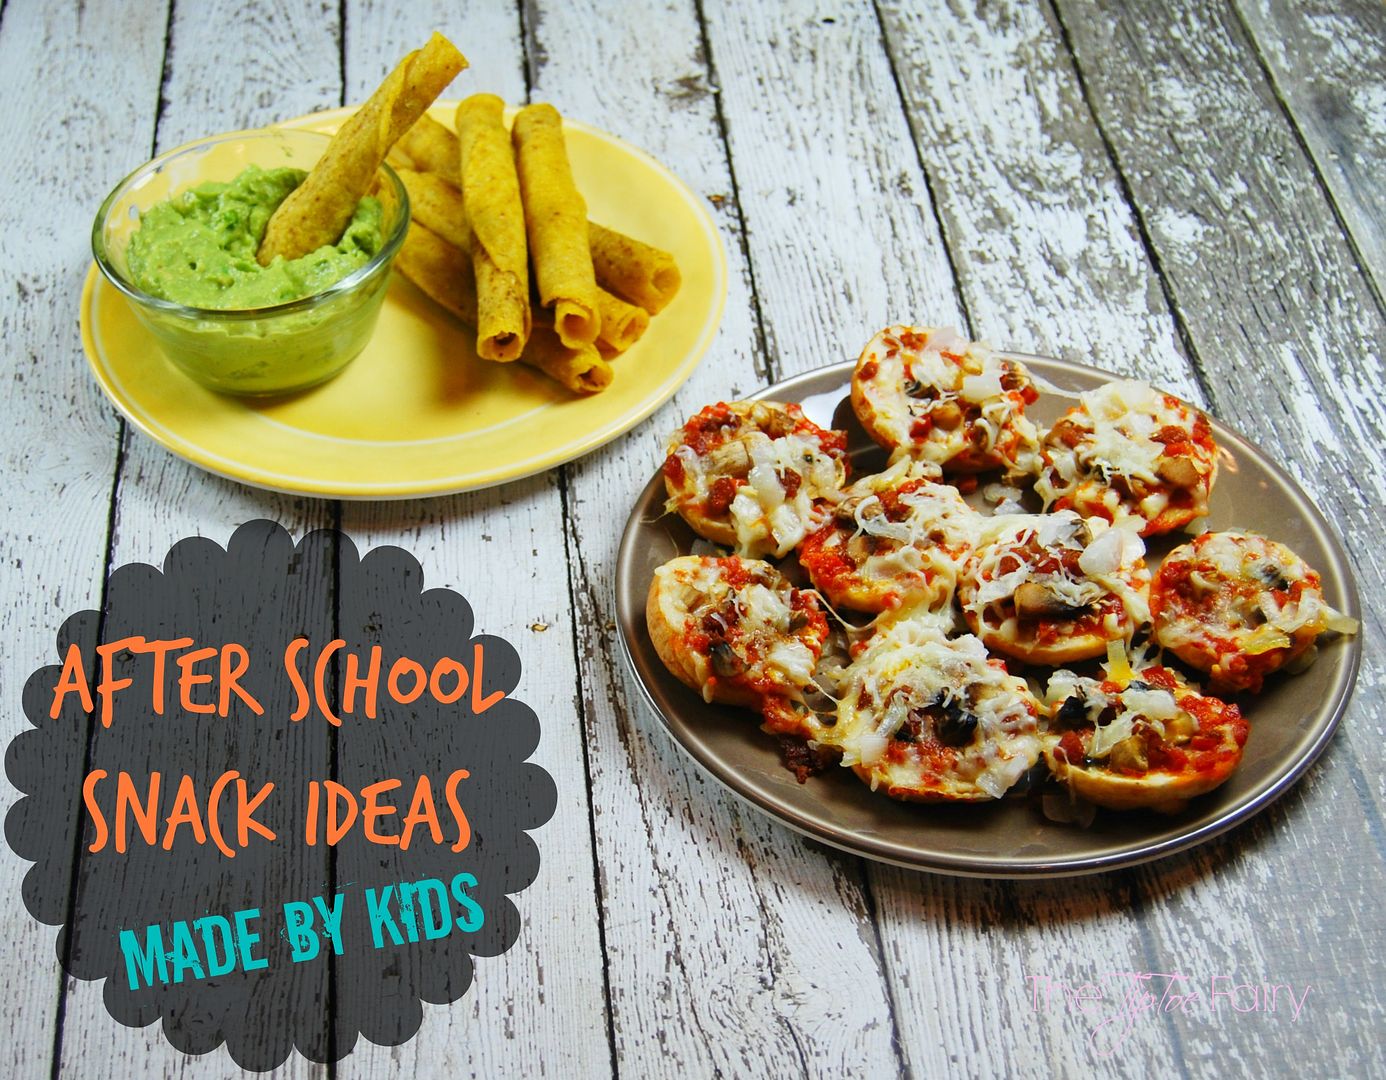 After School Snacks Made by Kids | The TipToe Fairy #afterschoolsnacks #shop #cbias #snacks #diprecipes